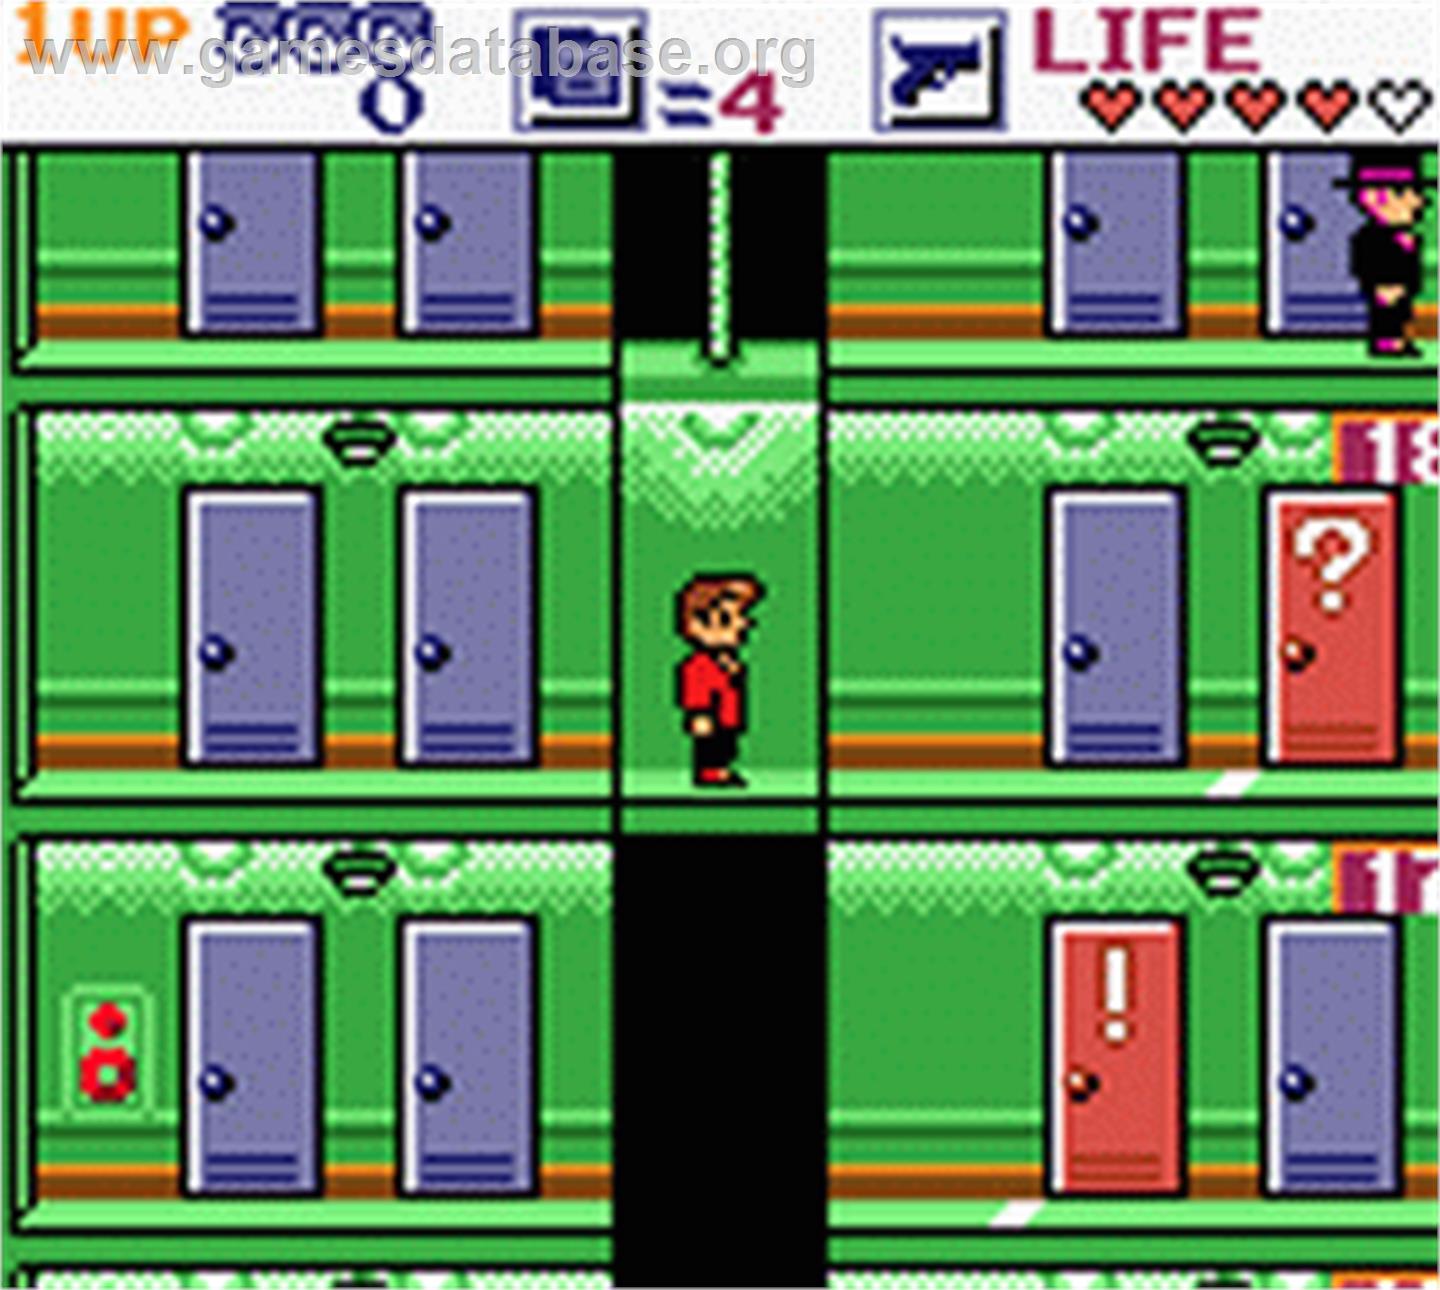 Elevator Action - Nintendo Game Boy Color - Artwork - In Game